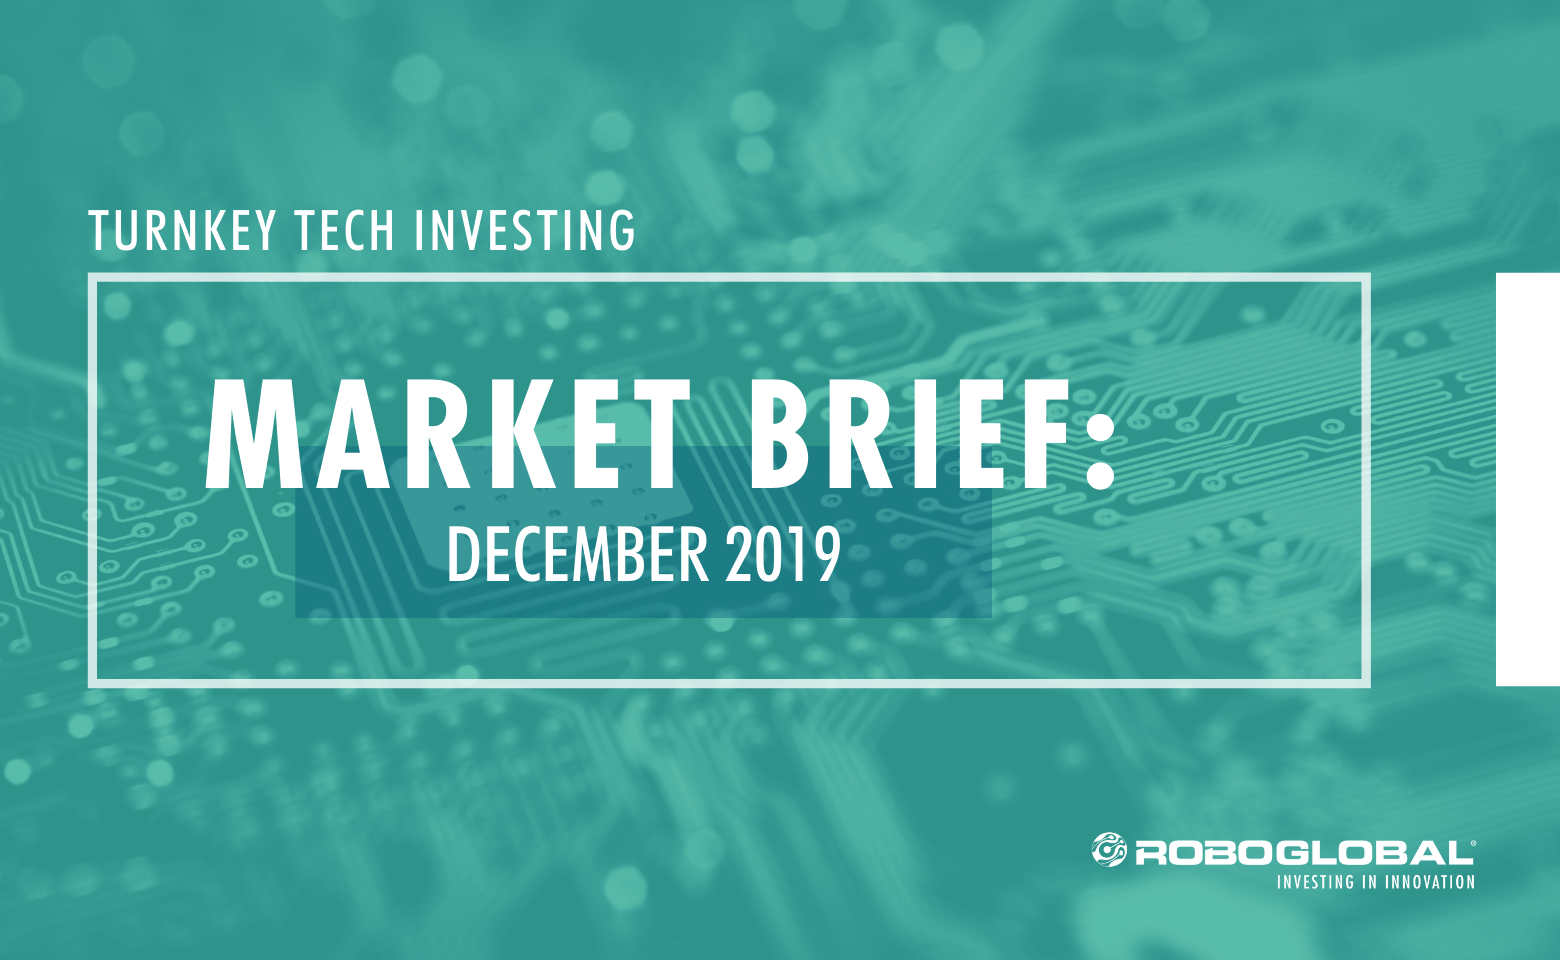 Turnkey Tech Investing: December 2019 Market Brief